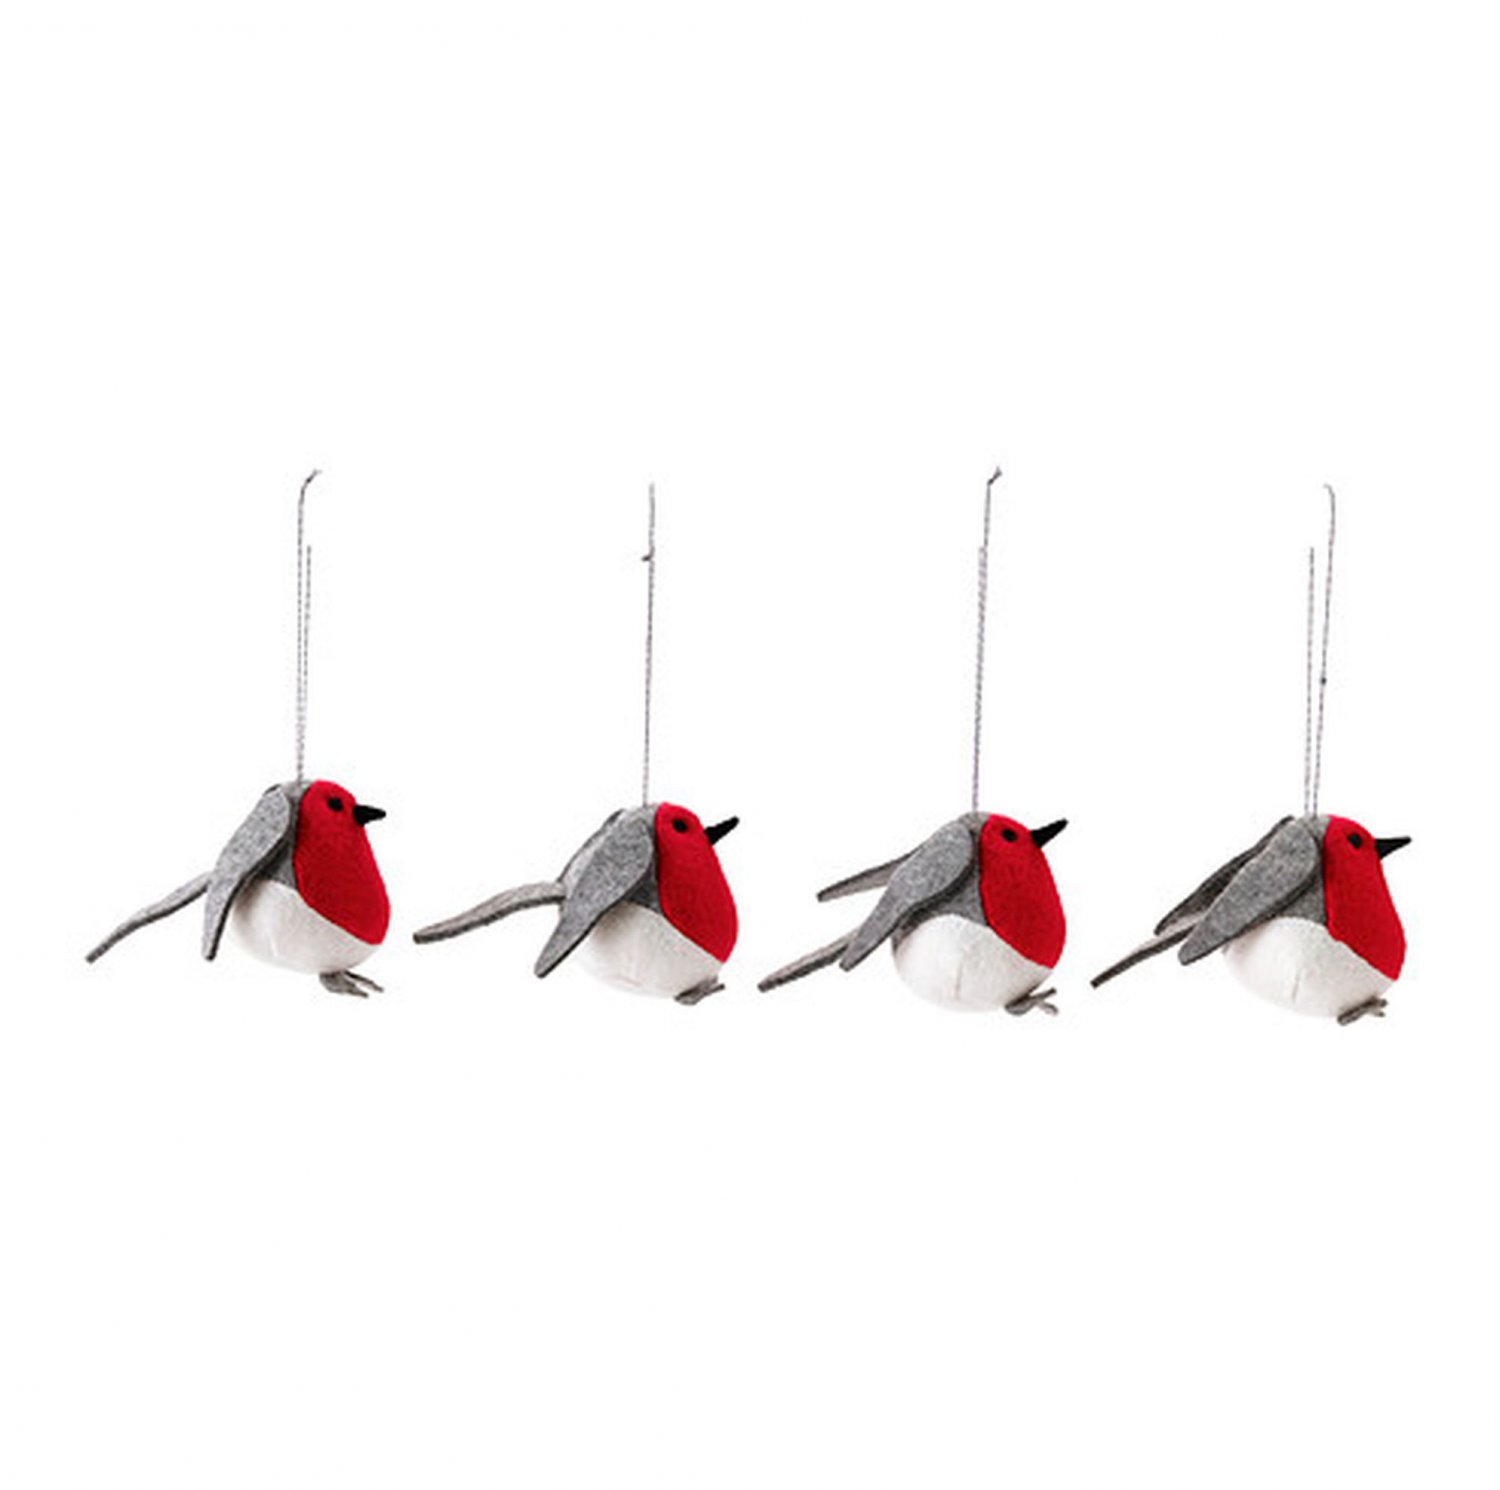 IKEA VINTER 2015 4 Birds Xmas Decorations Holiday Ornaments Gray Red Wren Chickadee Songbird